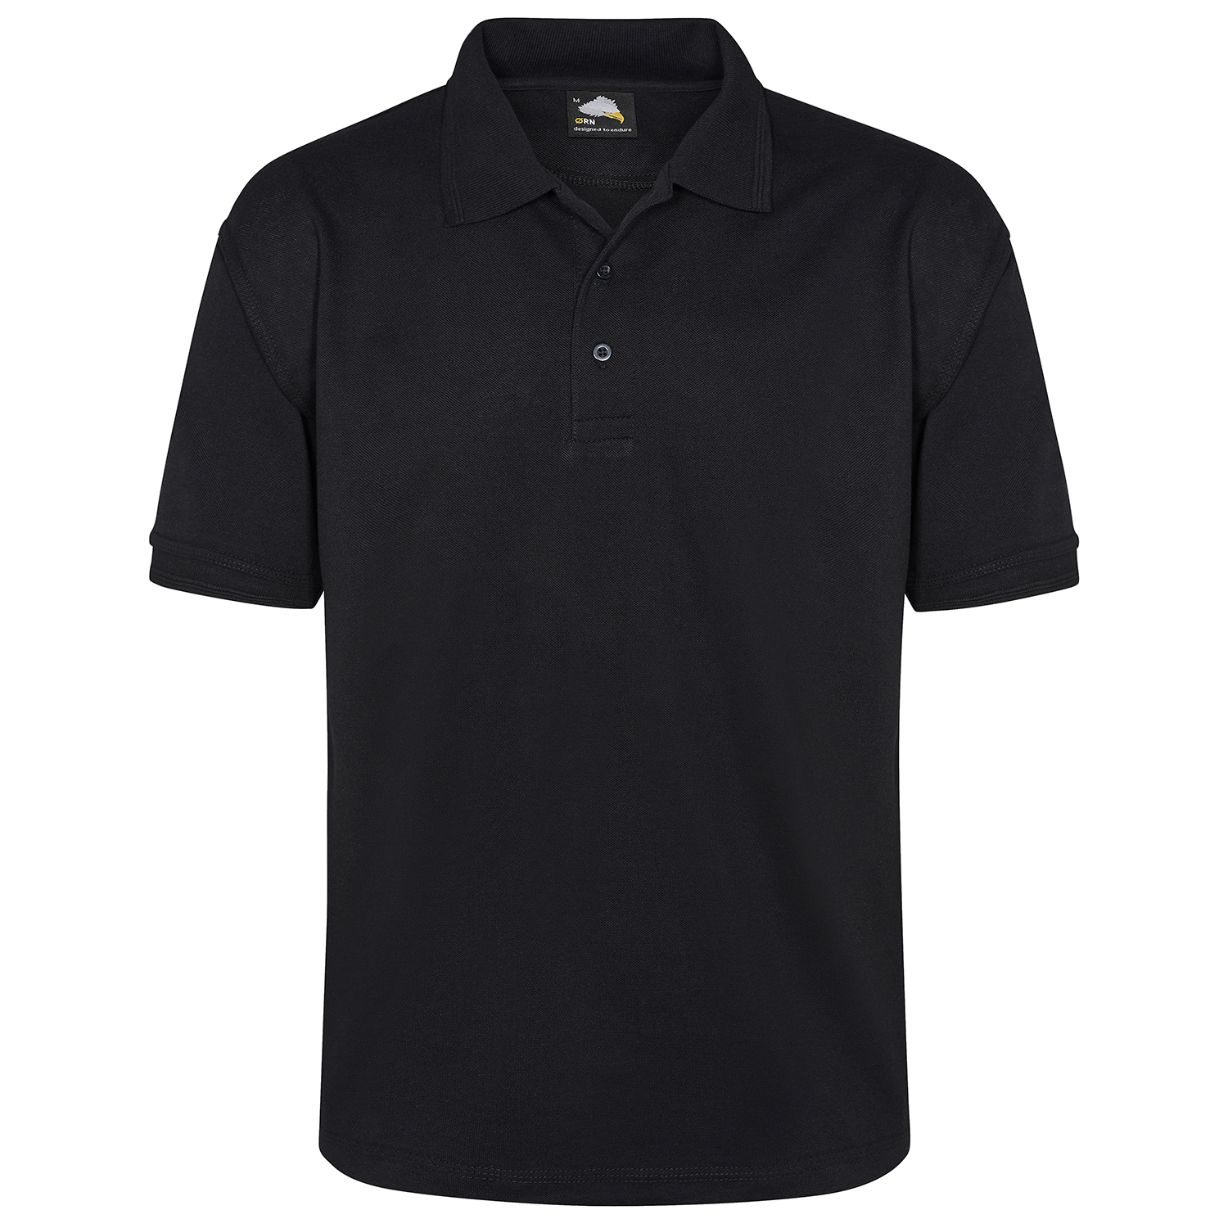 Mens Workwear Polo Shirts : Orn - Egret Slim Fit Poloshirt ...